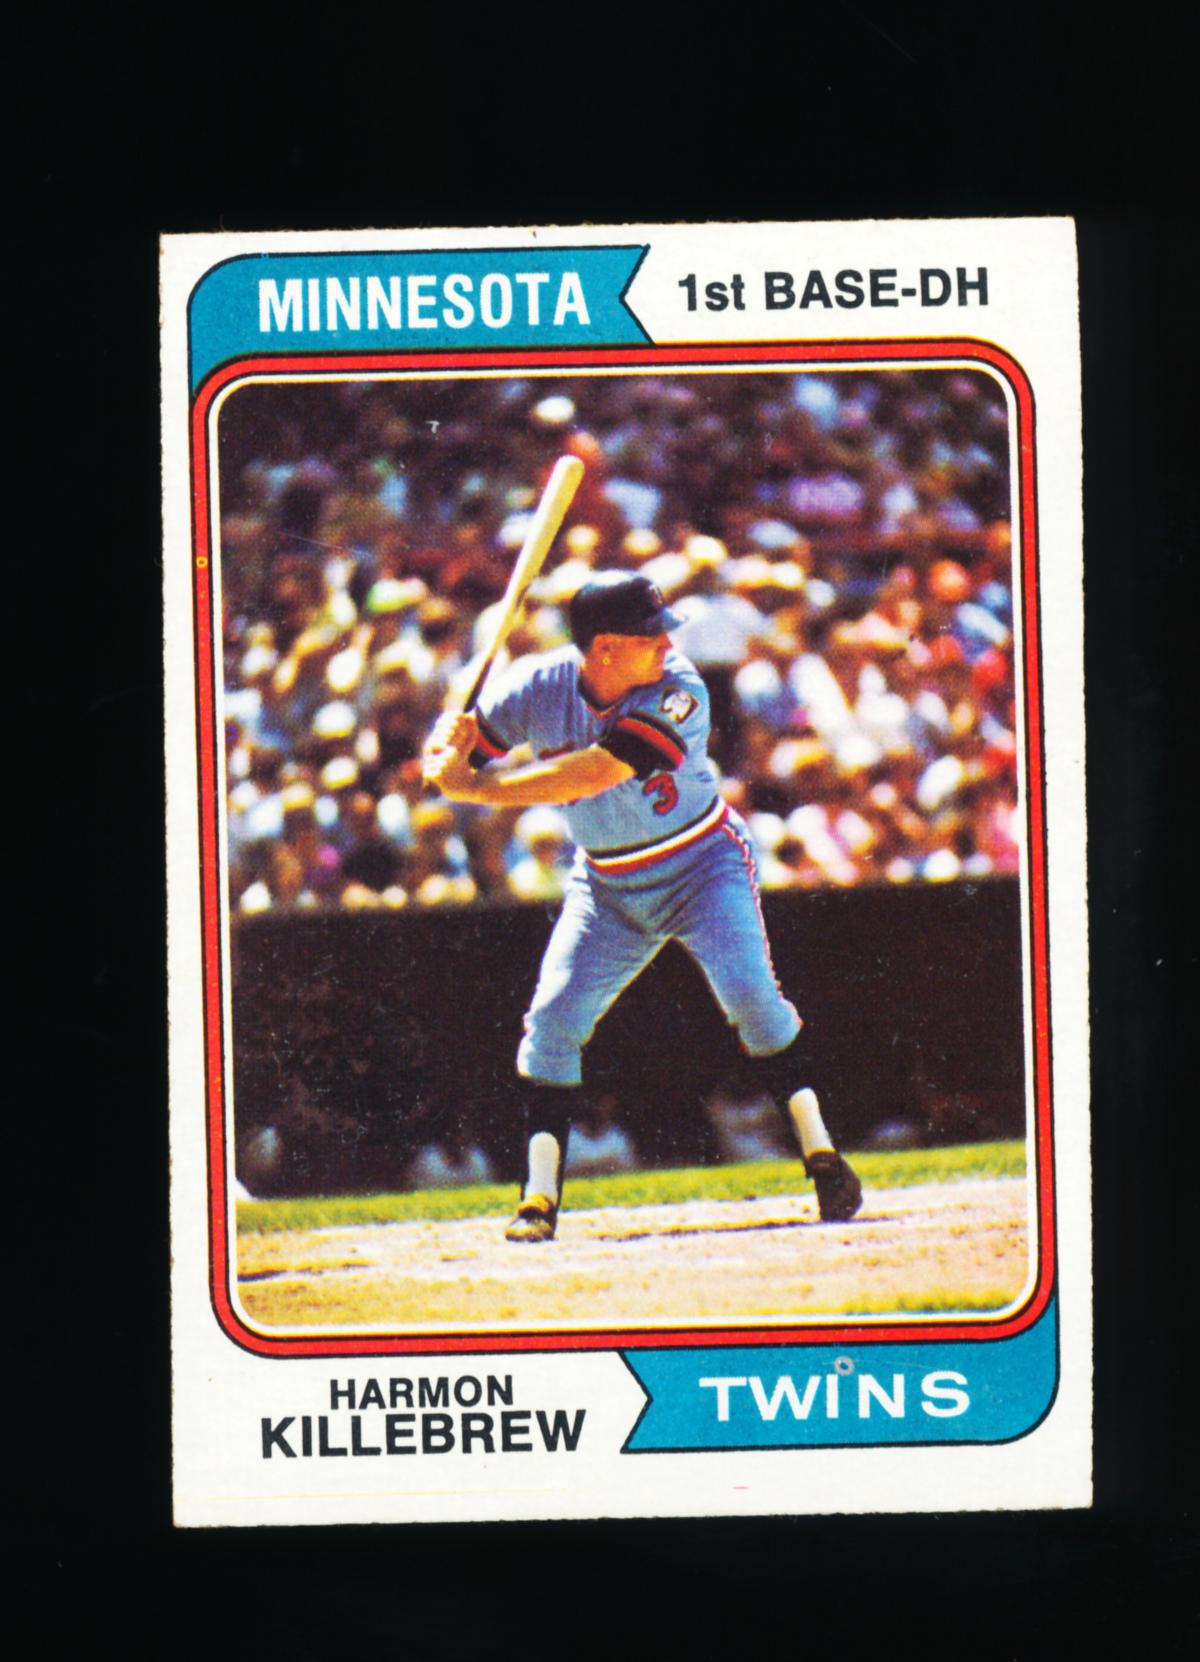 1974 Topps Baseball Card #400 Hall of Famer Harmon Killebrew Minnesota Twin